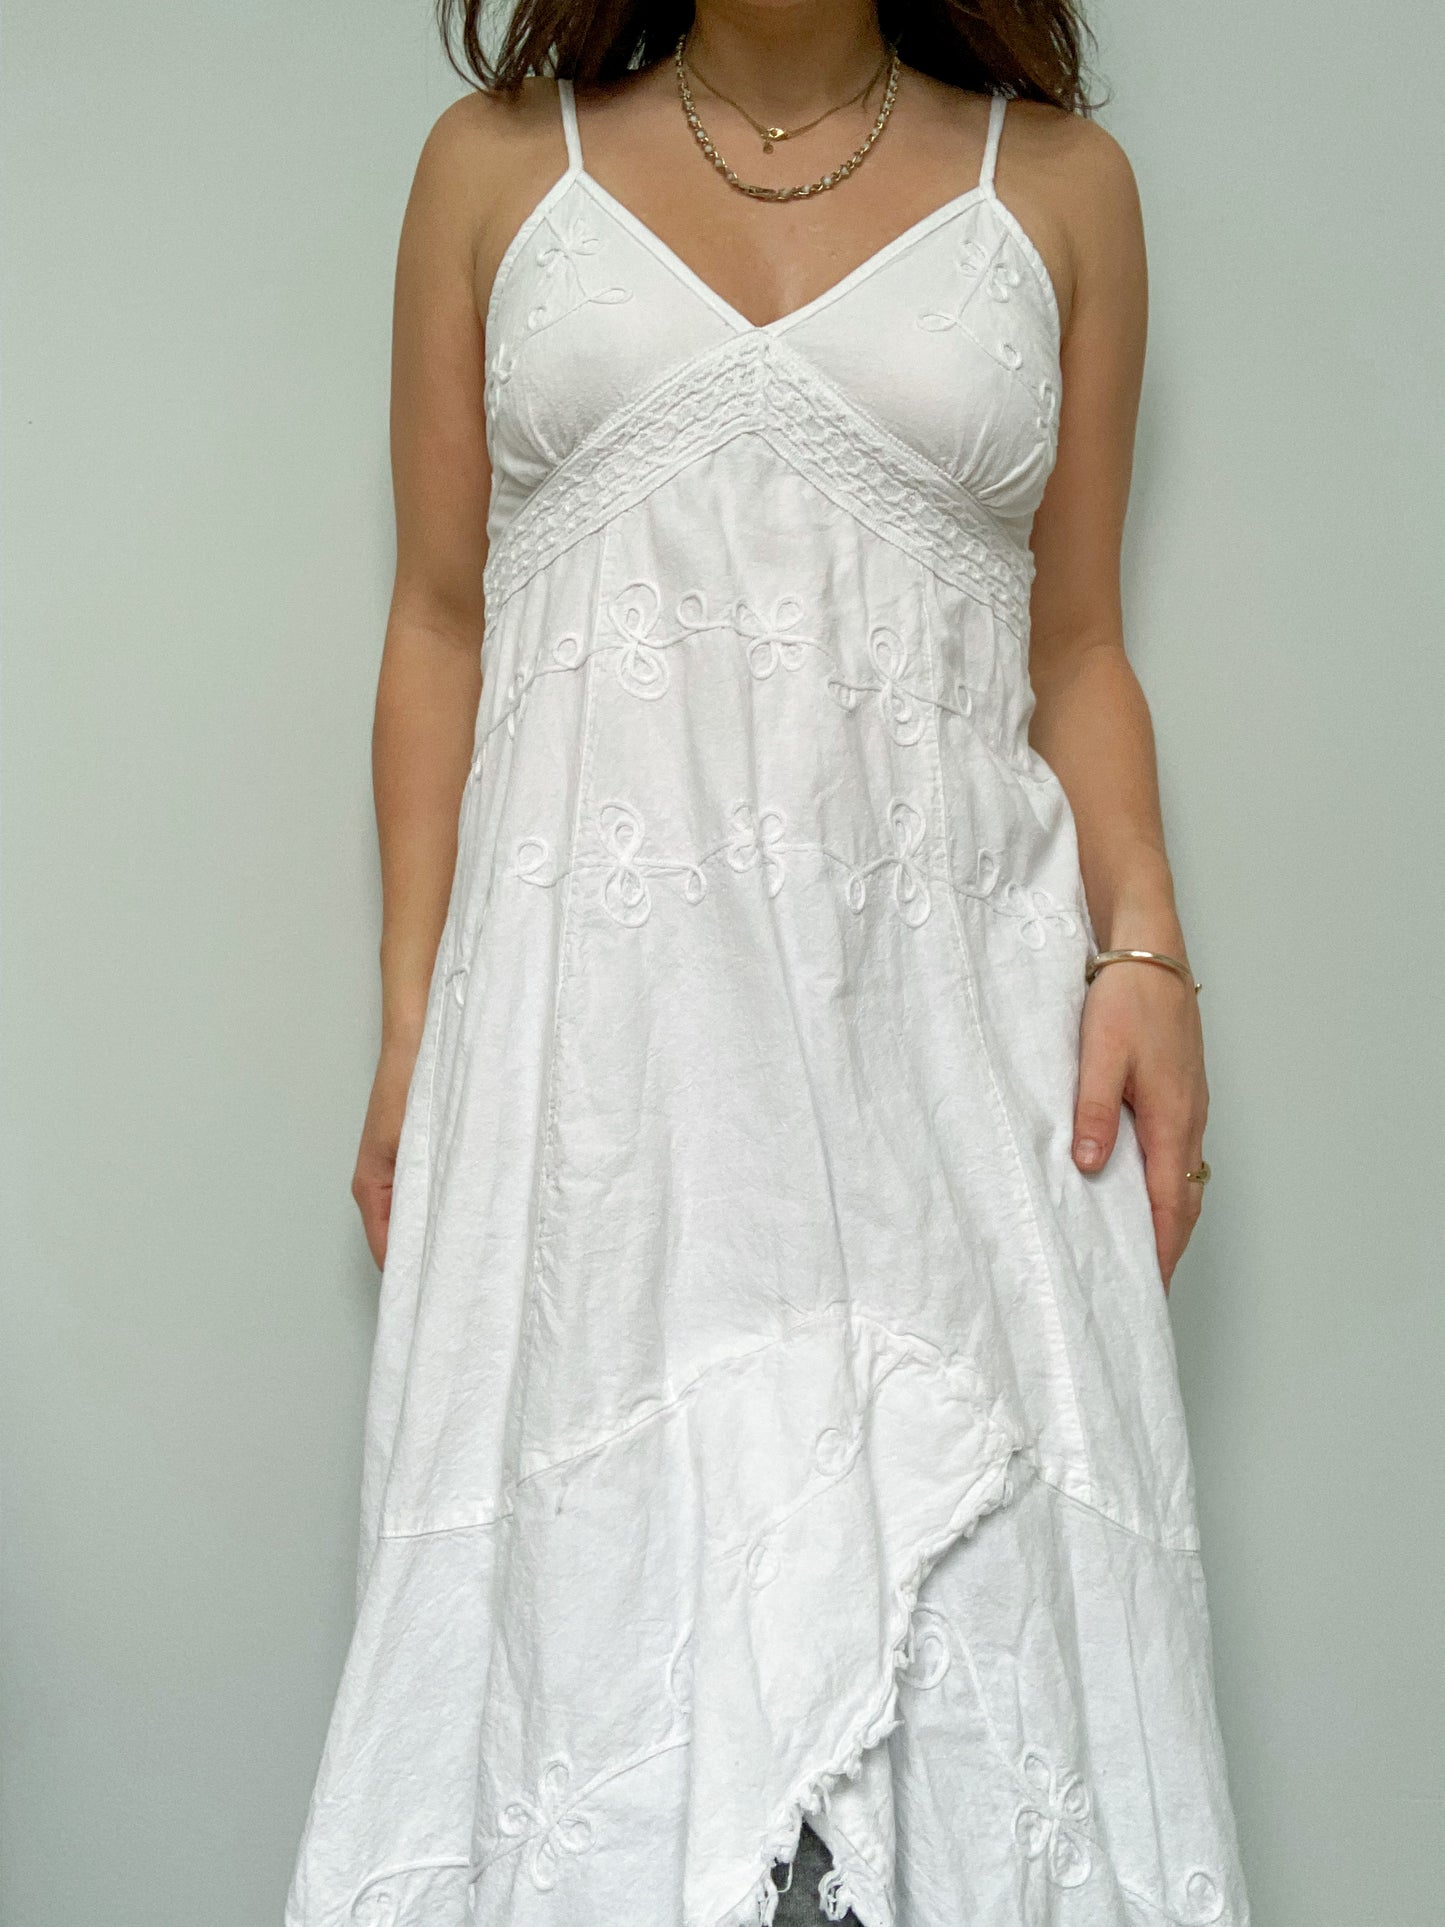 Vintage White Textured Rag Dress